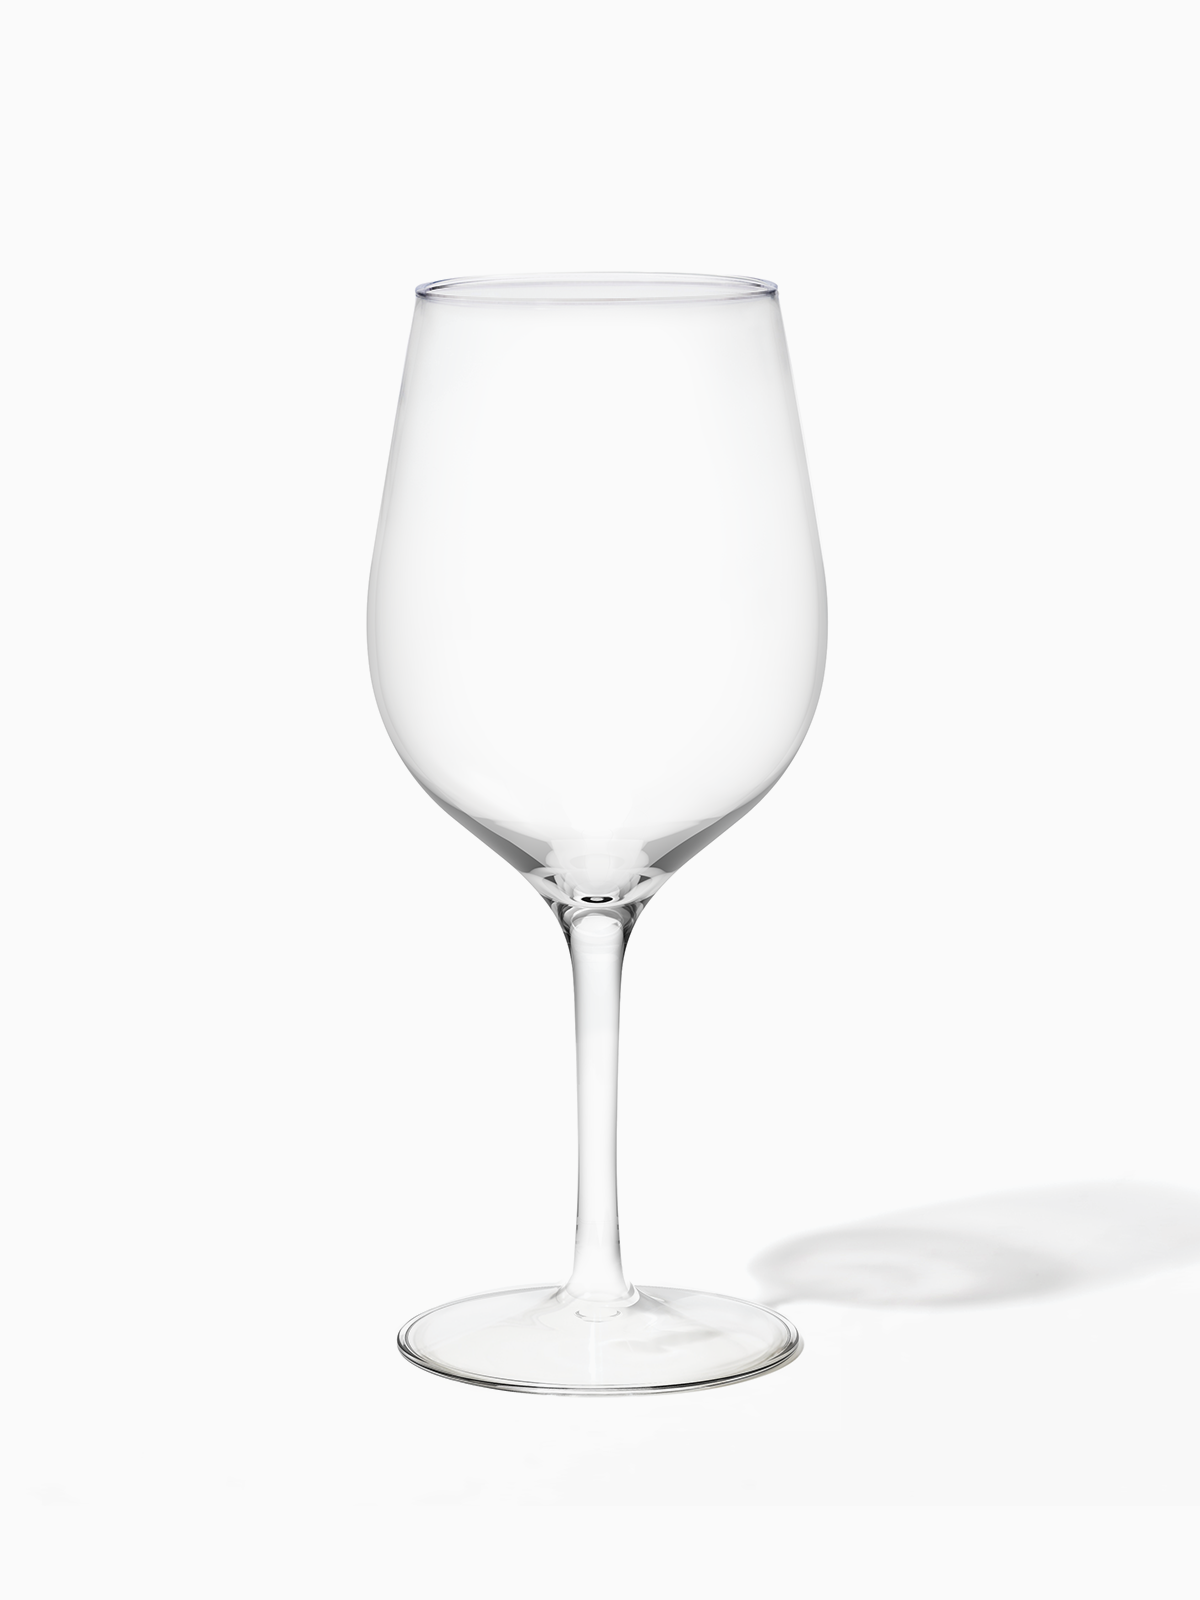 White Wine Glasses Set of 6-14Oz, Long Stem Wine Glasses with Thin Rim,  Crystal